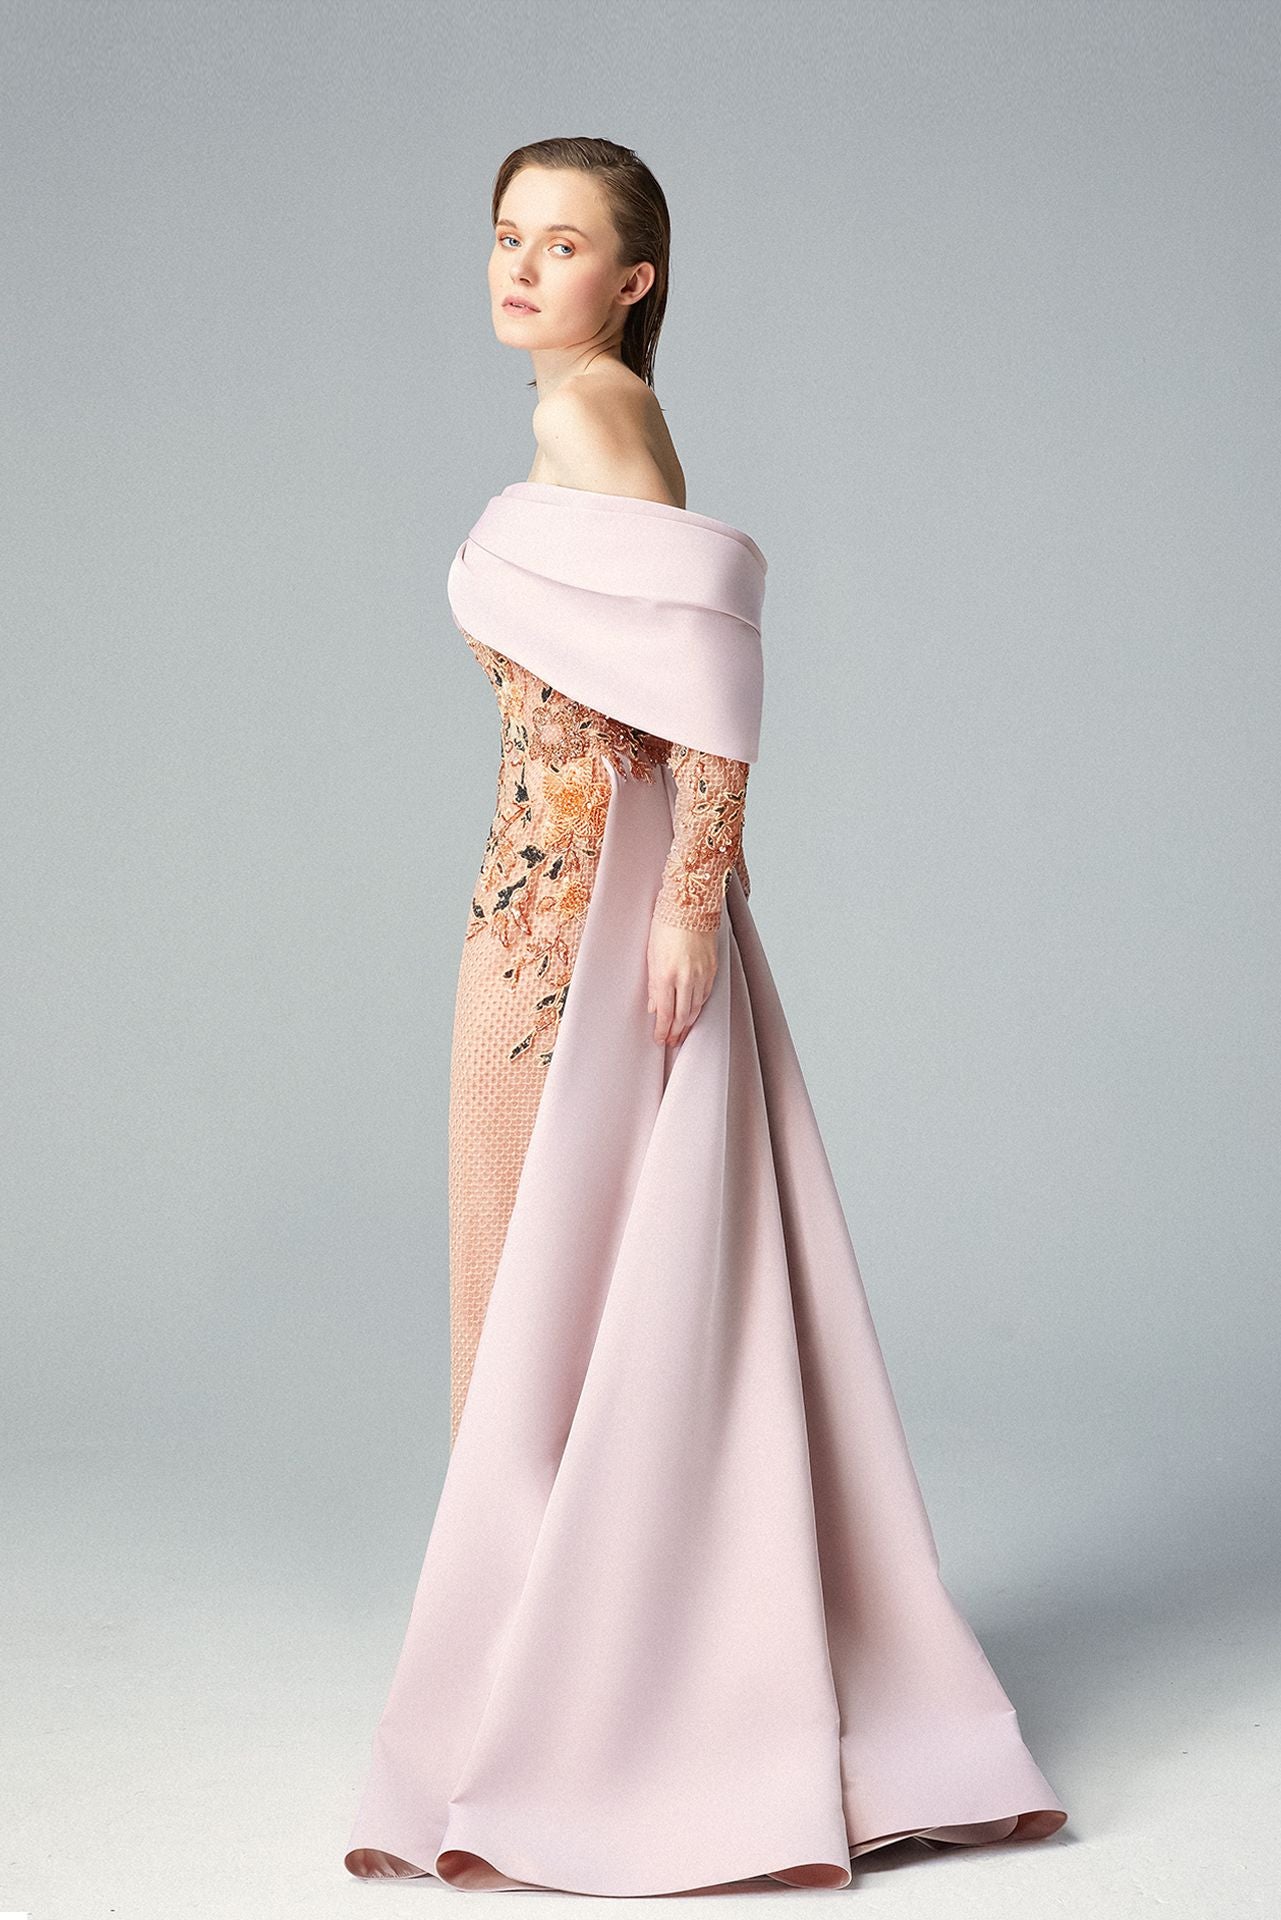 Seashell Pink Color Evening Dress Swarovski Bejeweled Net Fabric & Sashed Taffetas Bow Tie